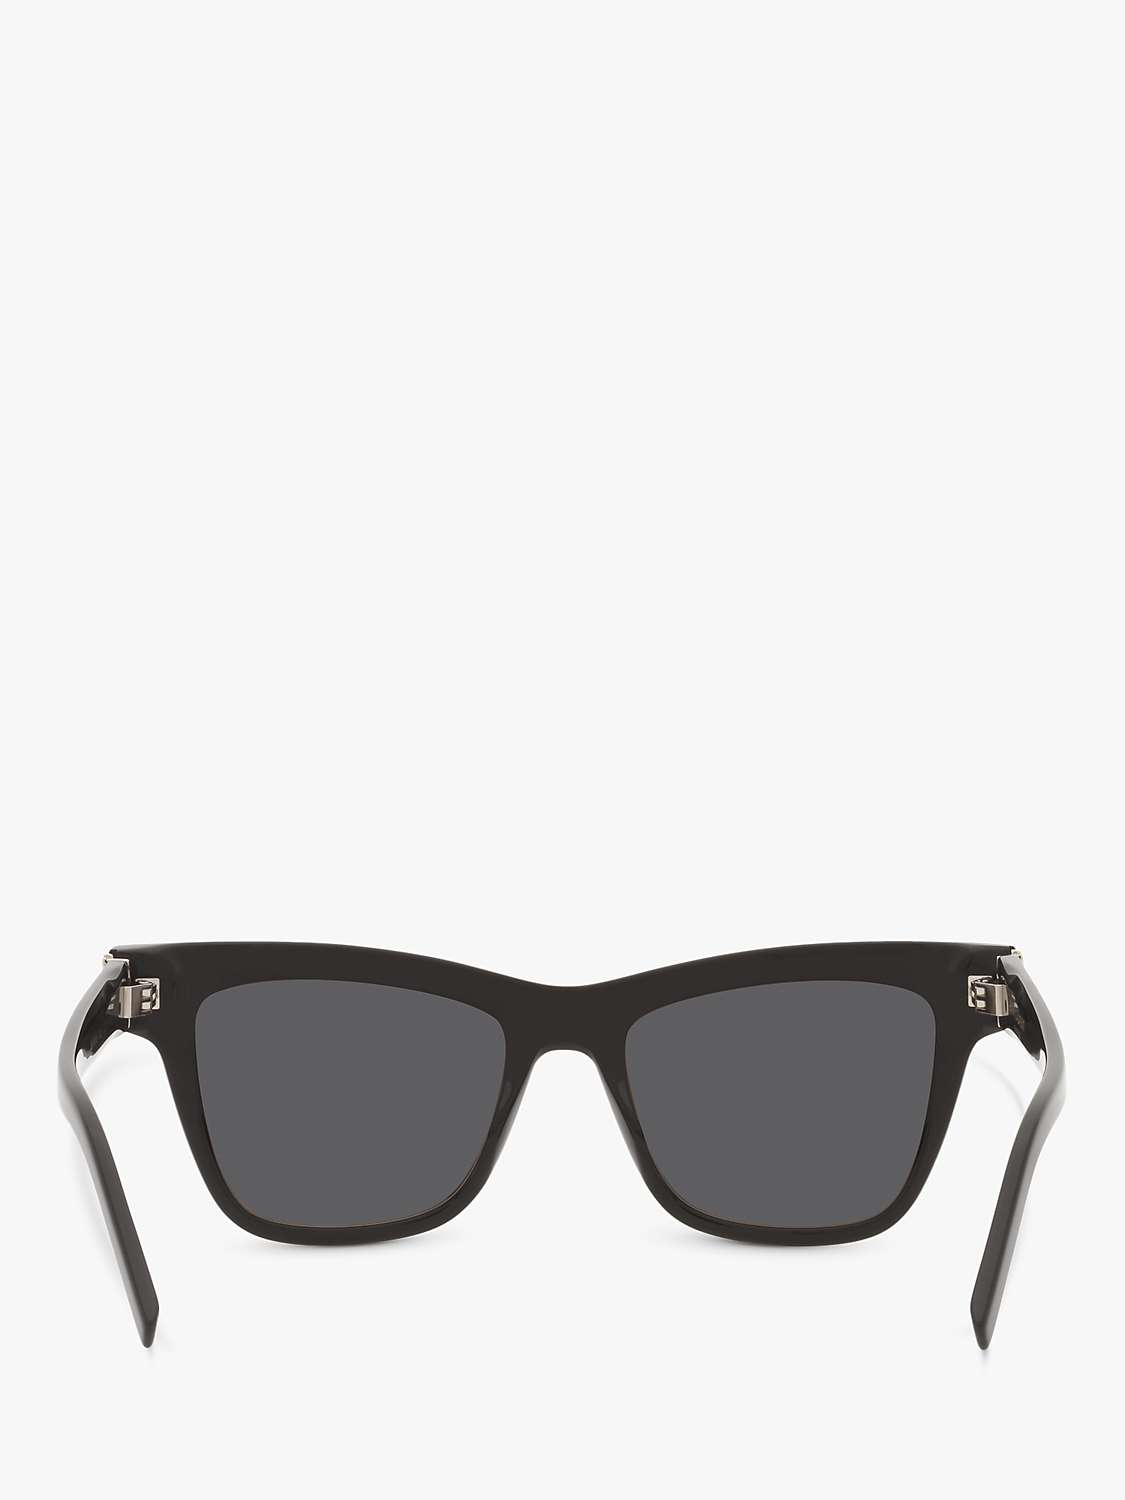 Buy Yves Saint Laurent YS000436 Women's Square Sunglasses, Black/Grey Online at johnlewis.com